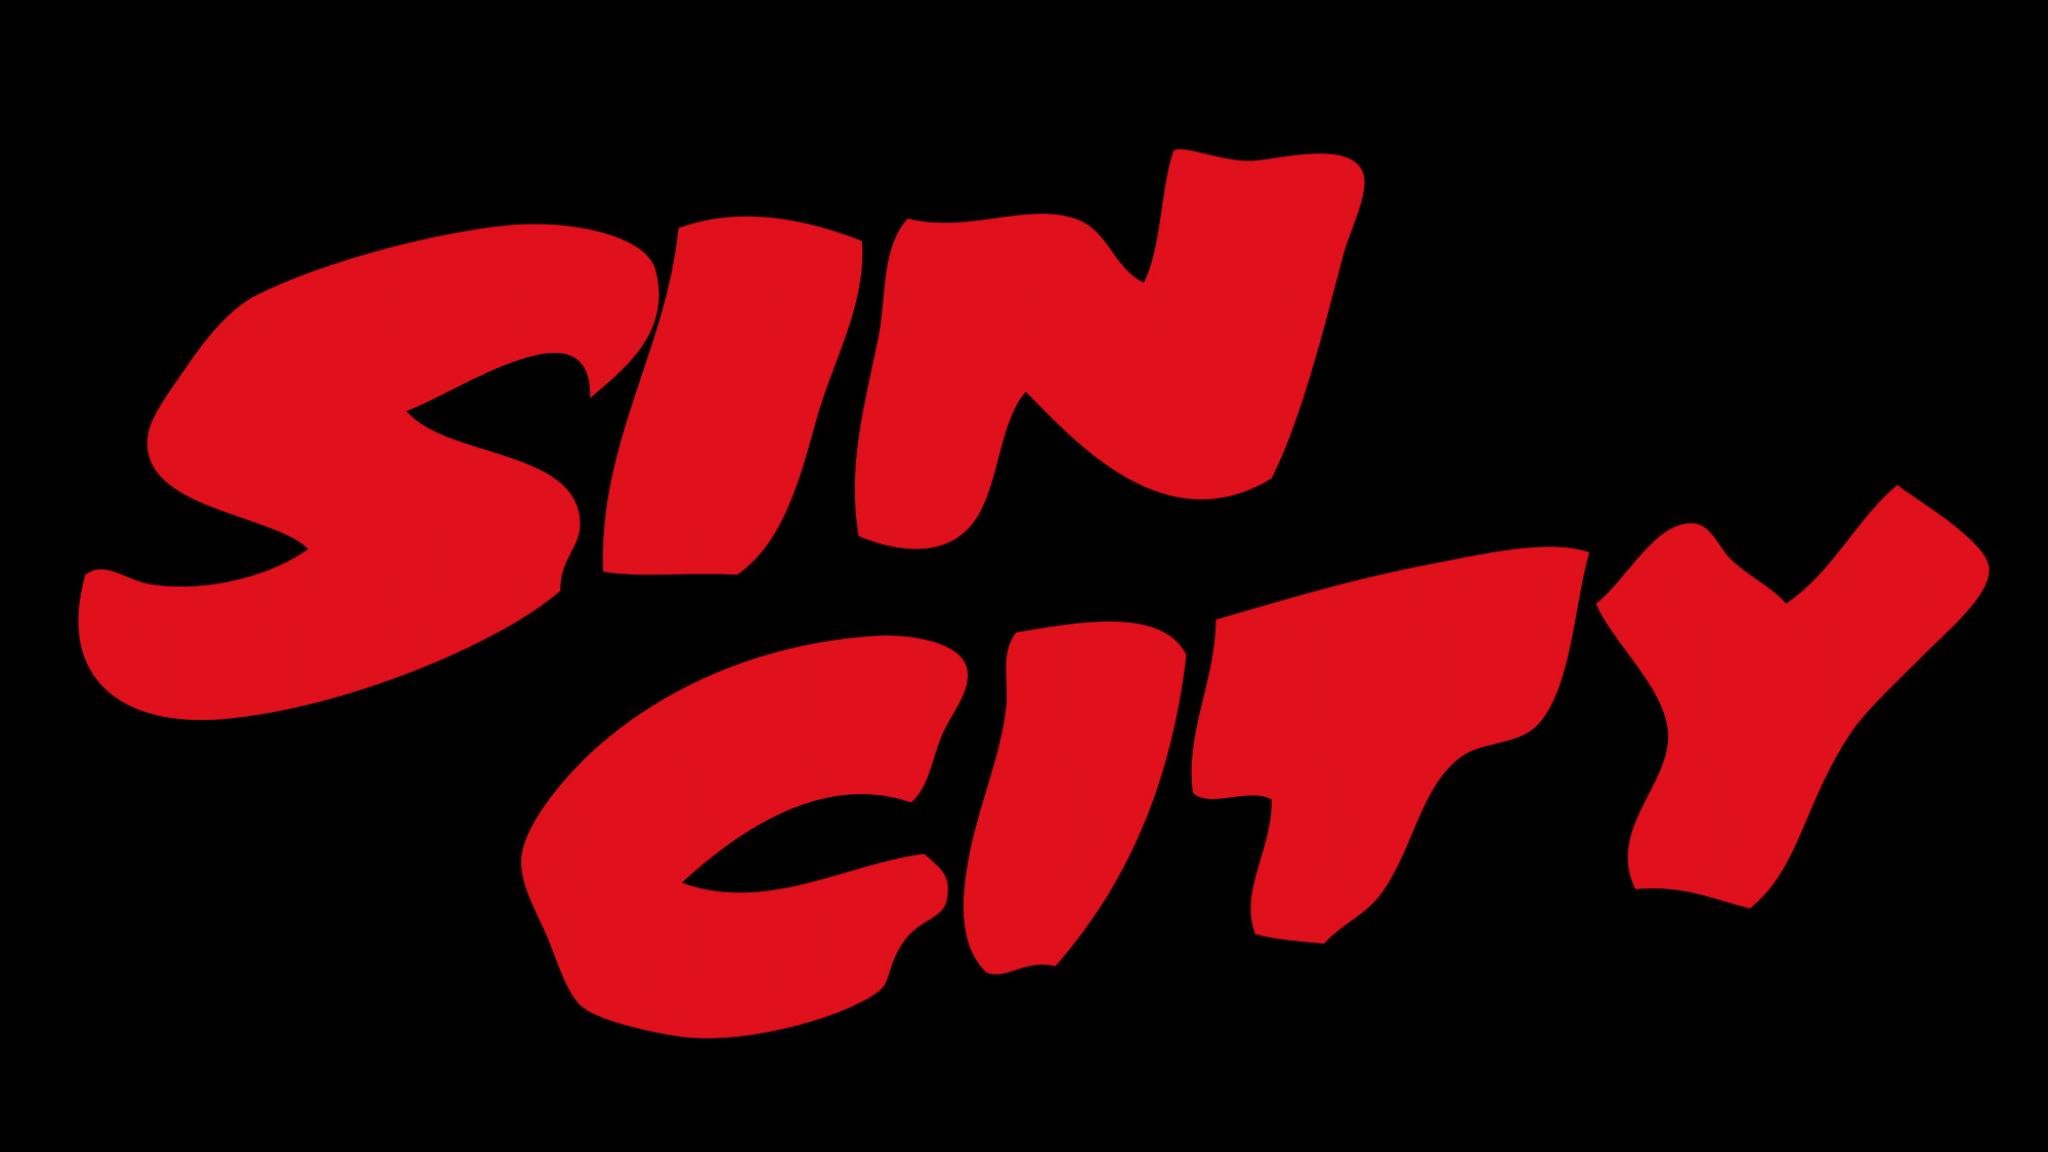 Best Sin City Comics wallpaper ID:132326 for High Resolution hd 2048x1152 computer